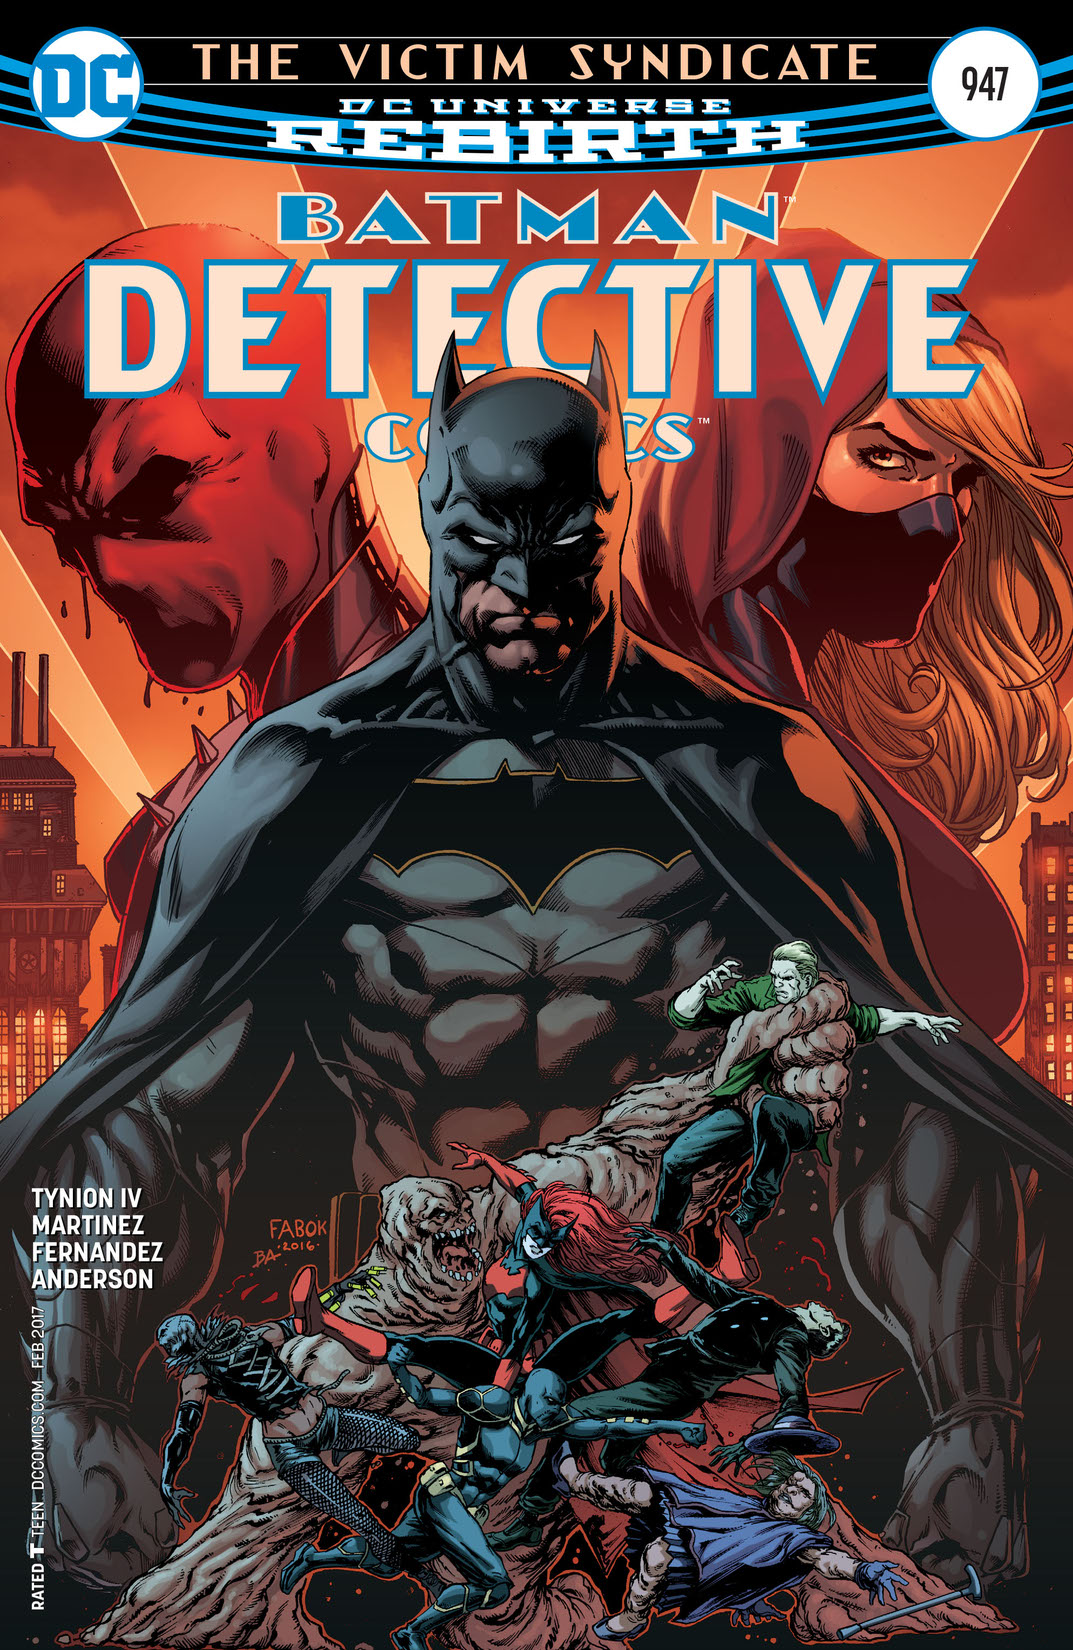 Detective Comics (2016-) #947 preview images